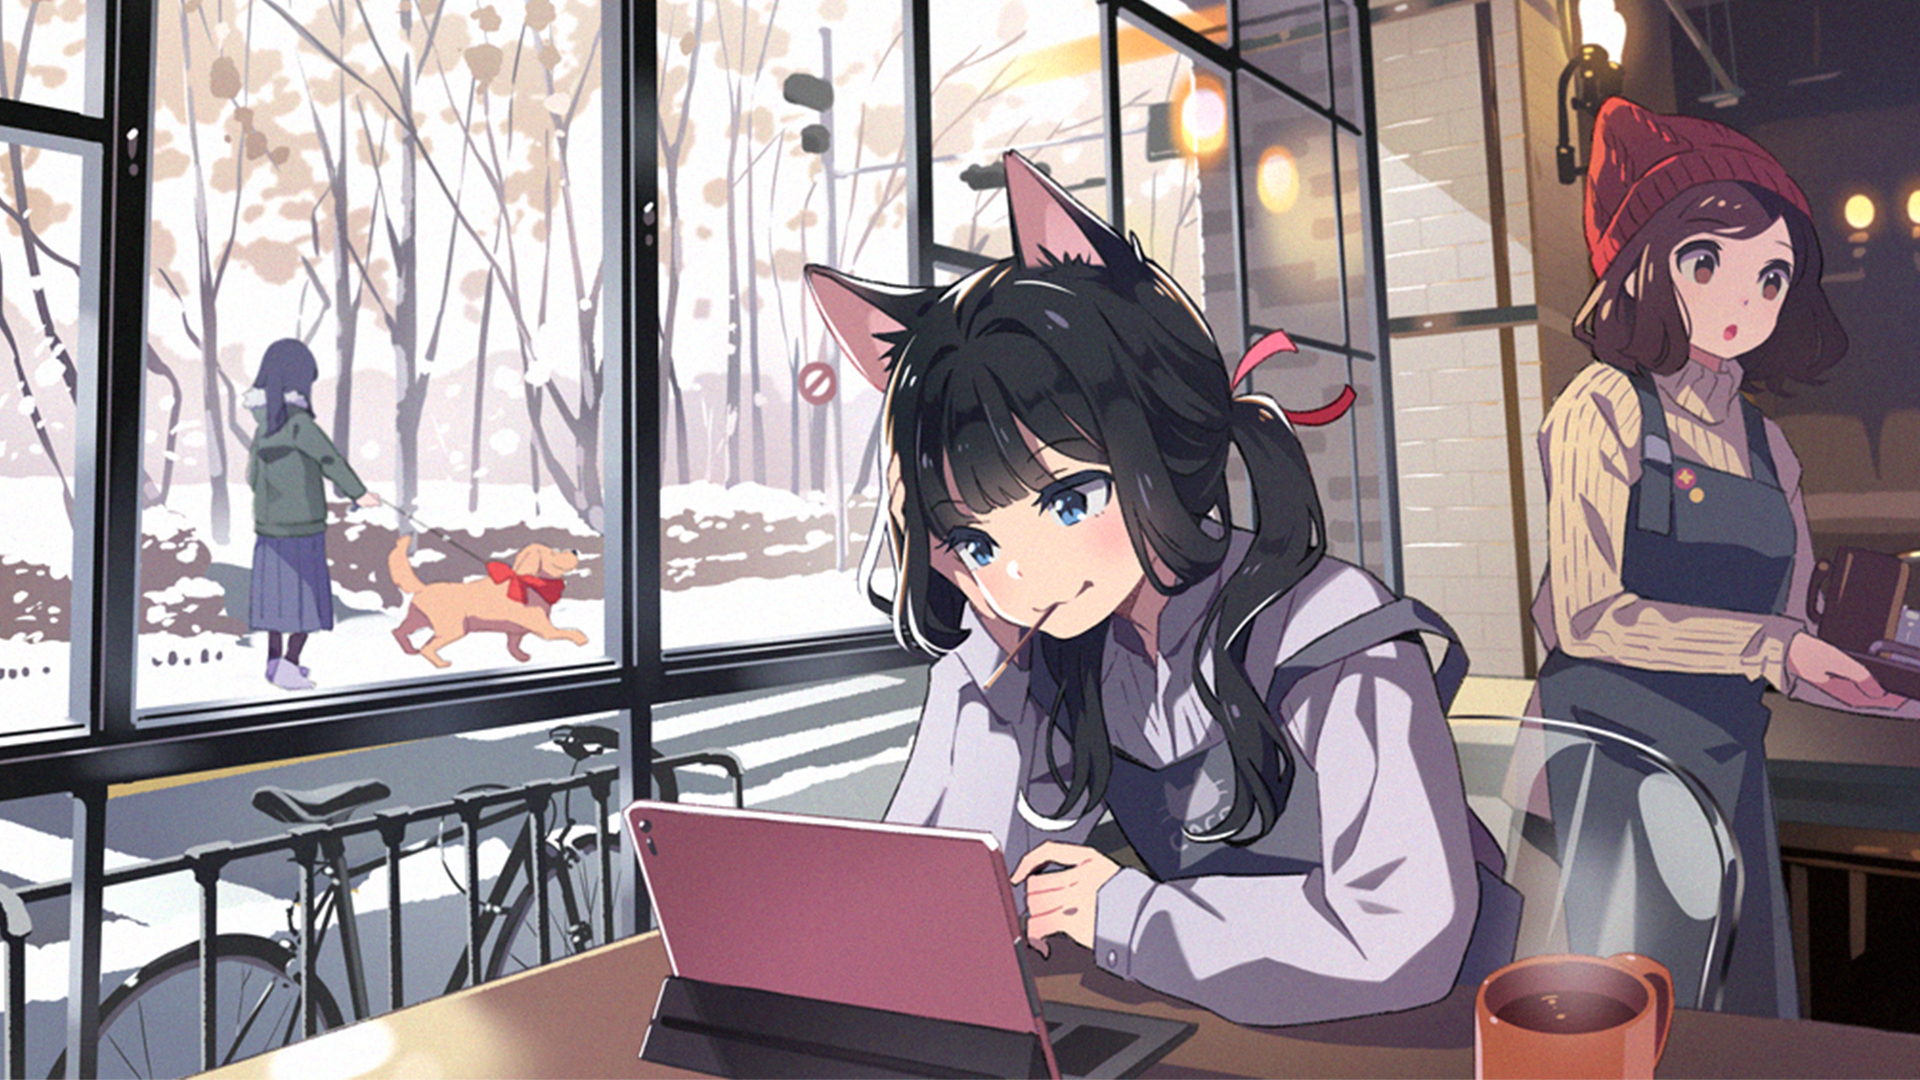 Anime 1920x1080 anime anime girls original characters cafe animal ears black hair blue eyes laptop window sitting